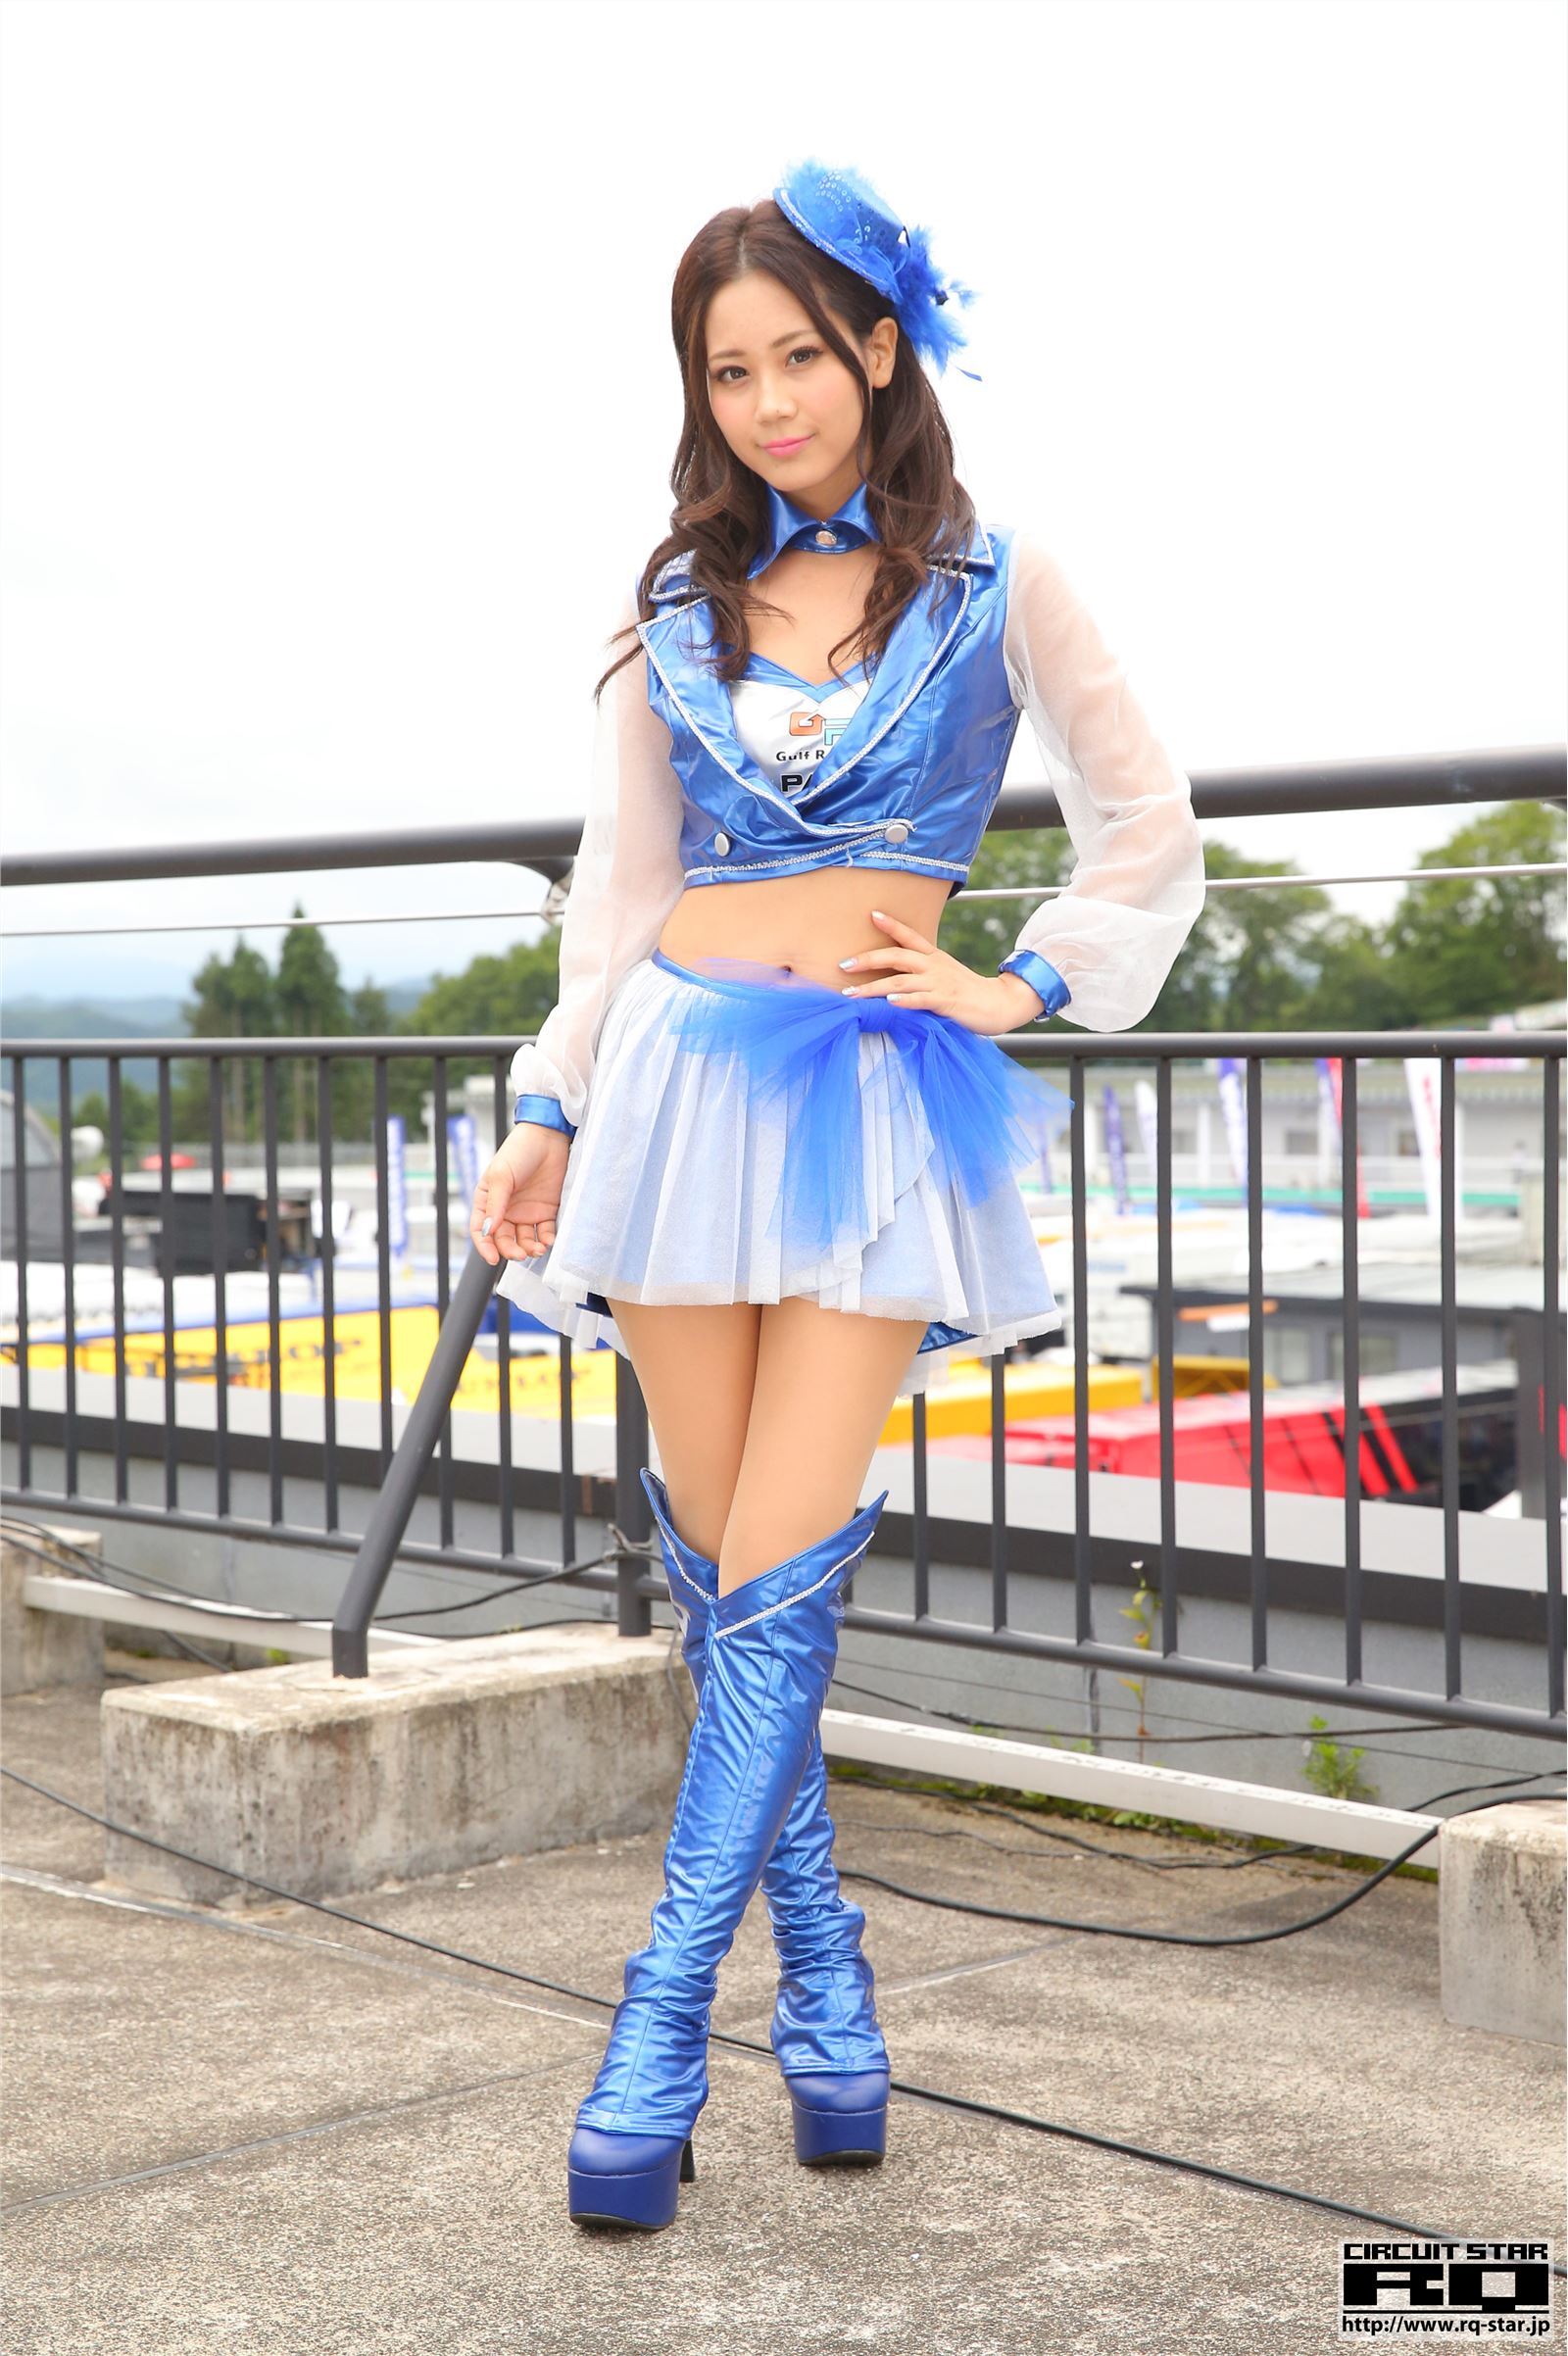 [RQ-STAR]2018.05.11 Risa Oshima 大島理沙 Race Queen